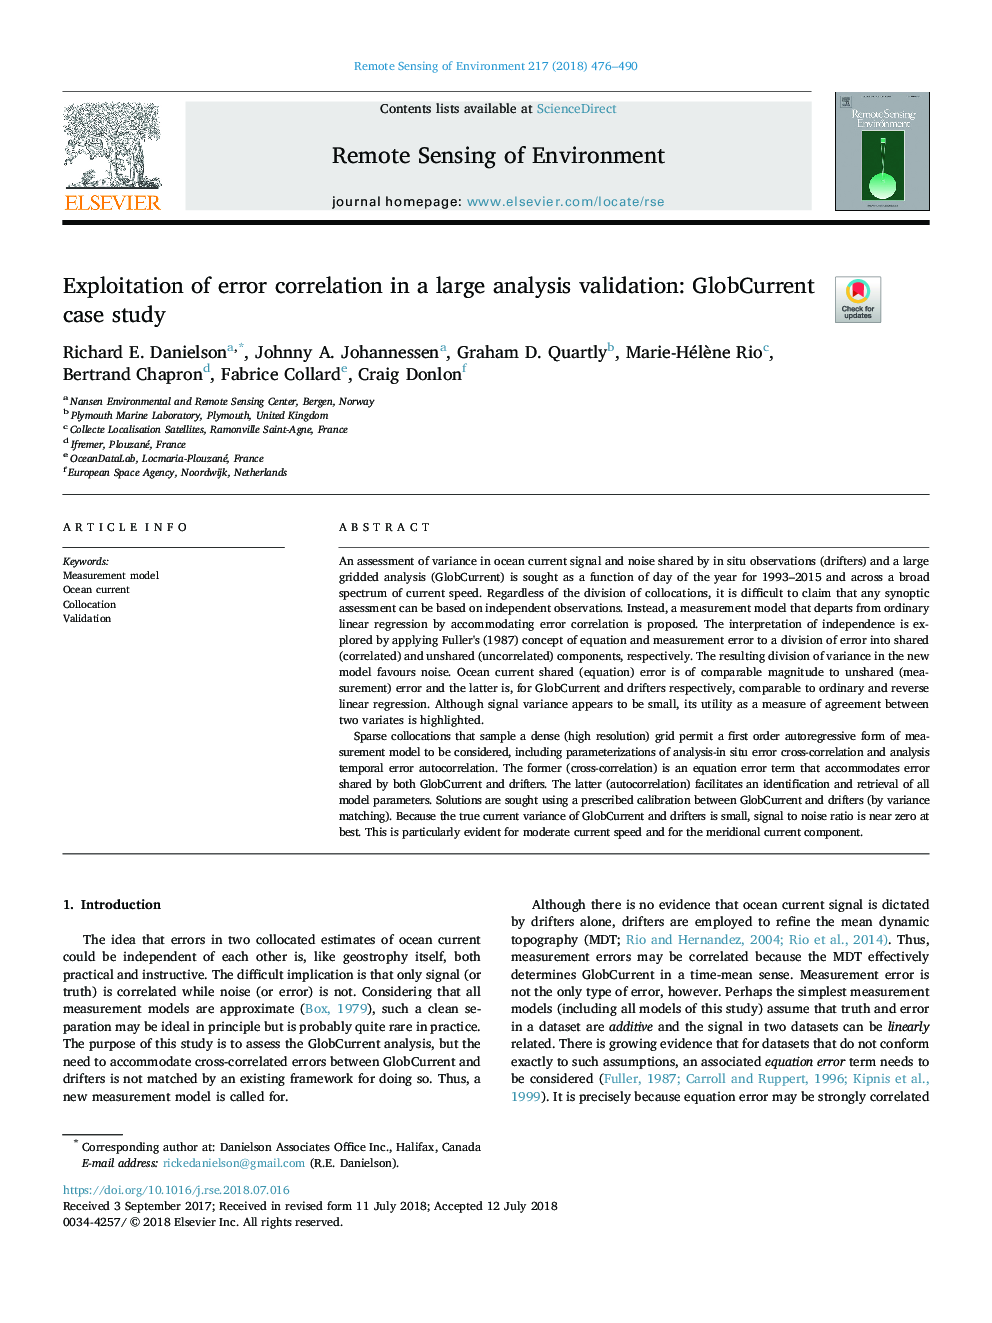 Exploitation of error correlation in a large analysis validation: GlobCurrent case study